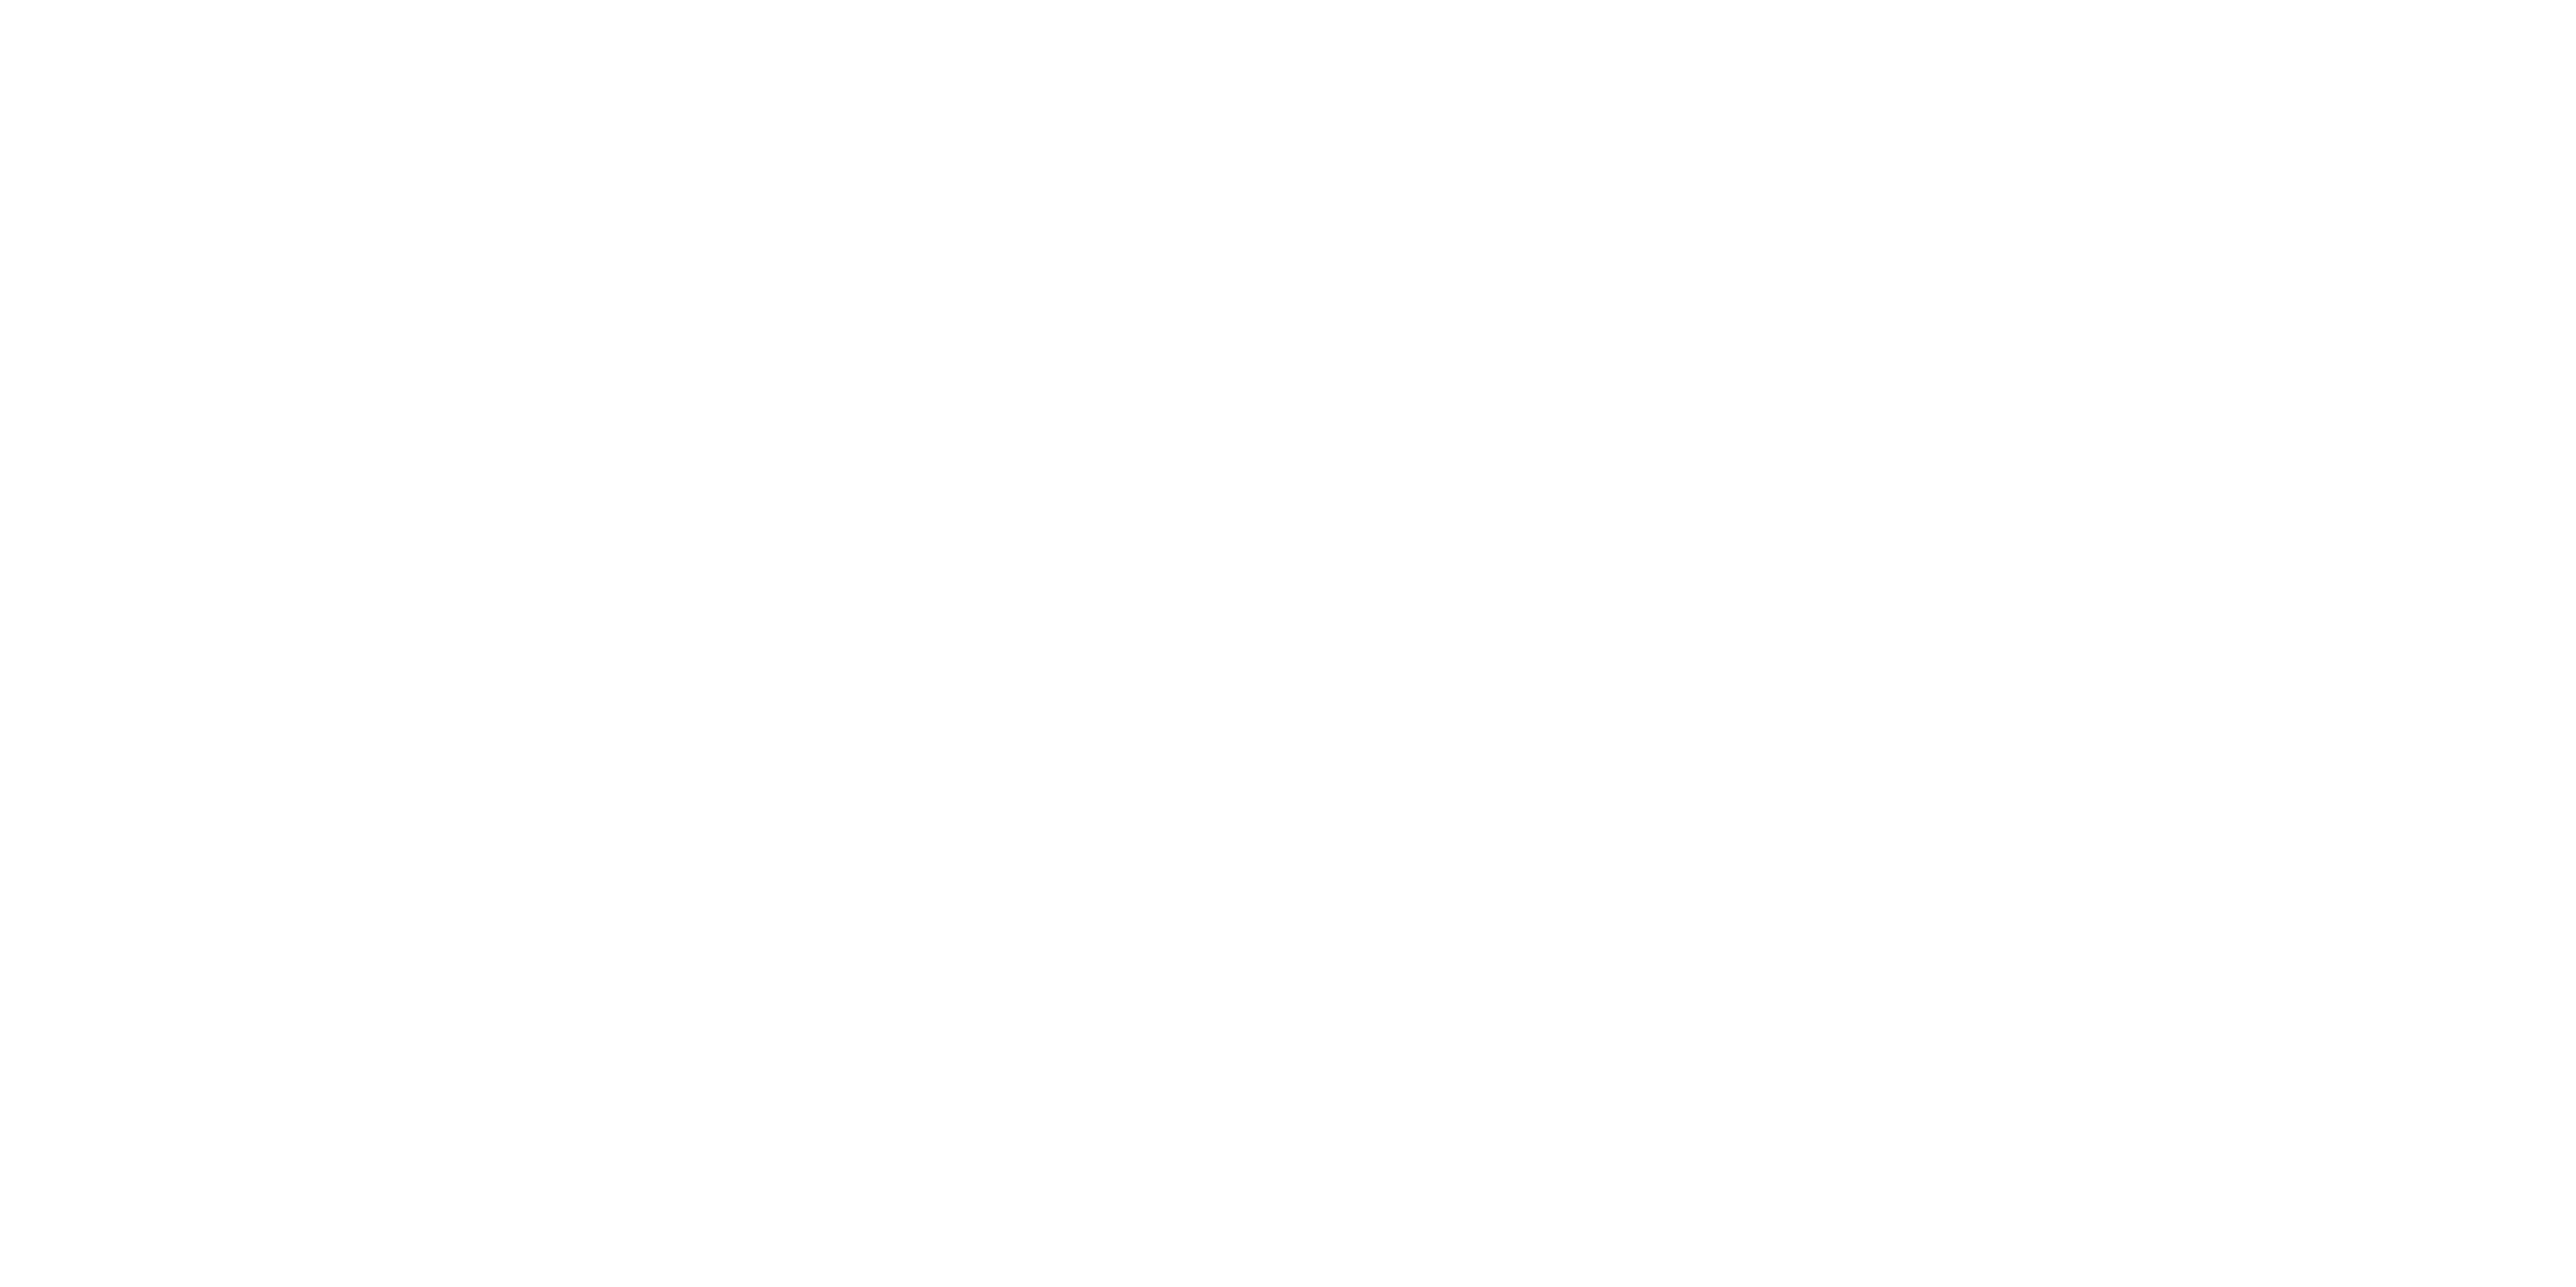 Makoon Transition Inc.